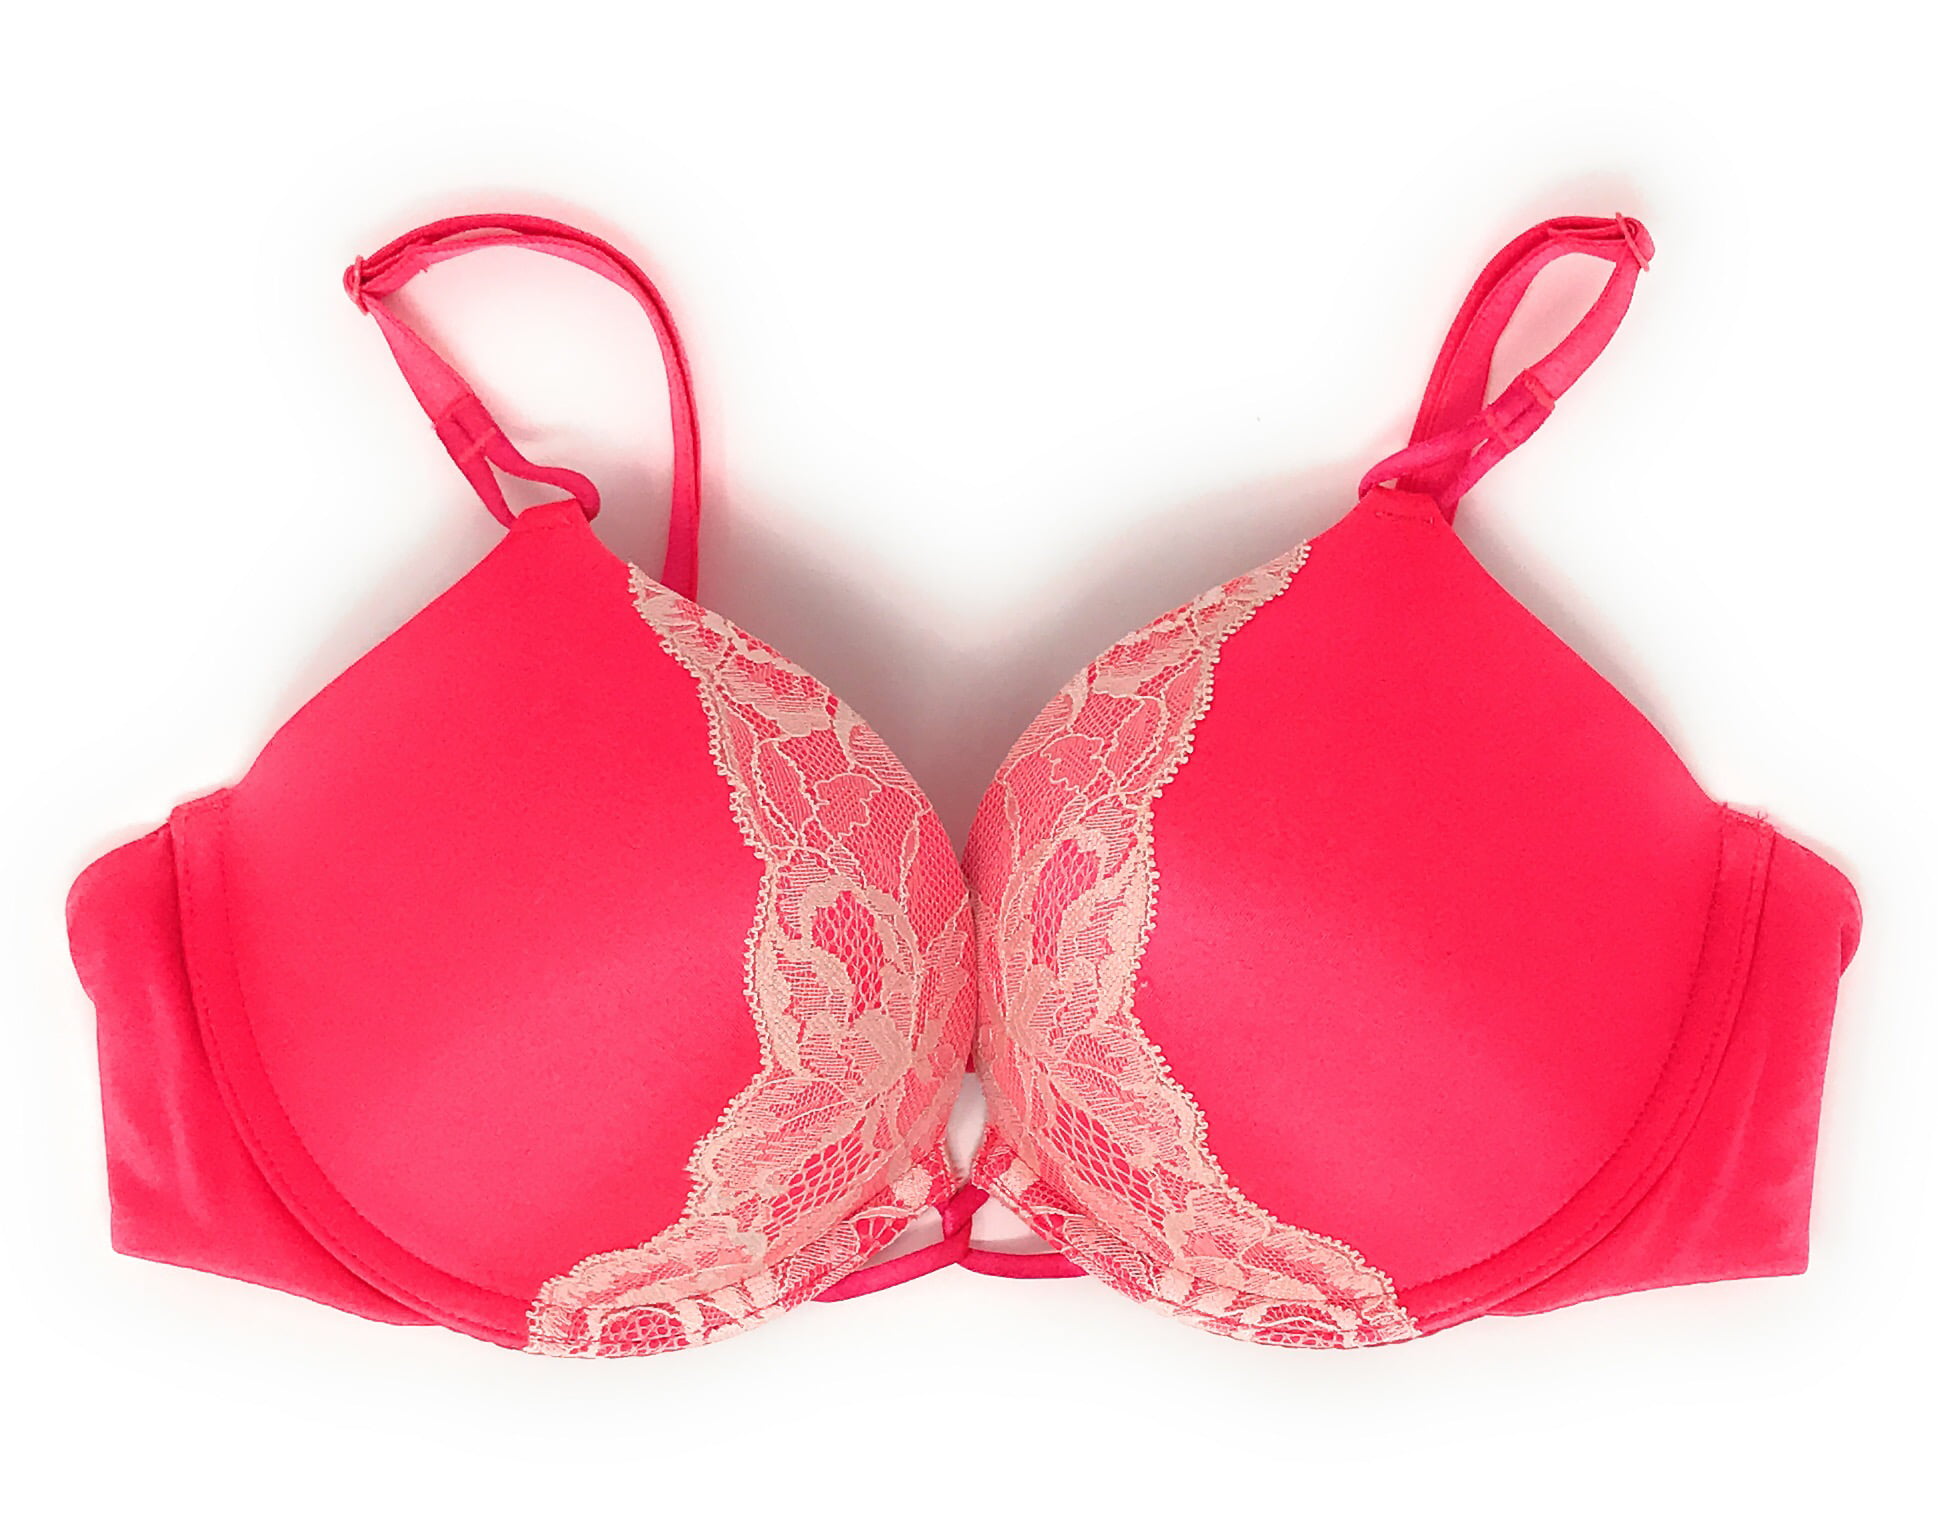 Victoria's Secret, Intimates & Sleepwear, 32a Bombshell Add2cups Strapless  Pushup Bra Light Pink Crystal Embellished